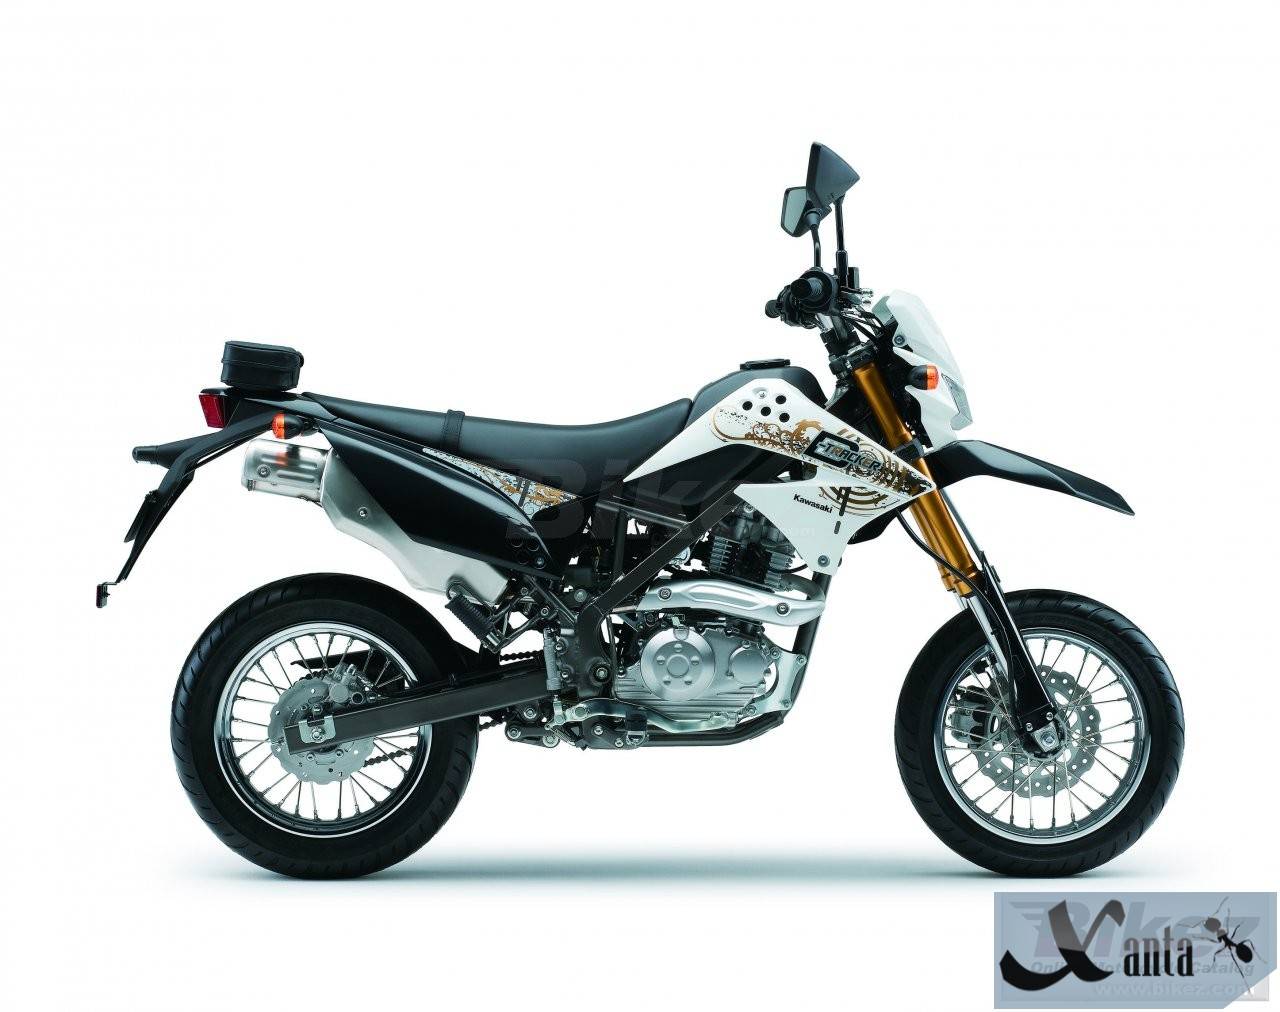 Мотоцикл kawasaki kx 125: обзор и технические характеристики | ⚡chtocar